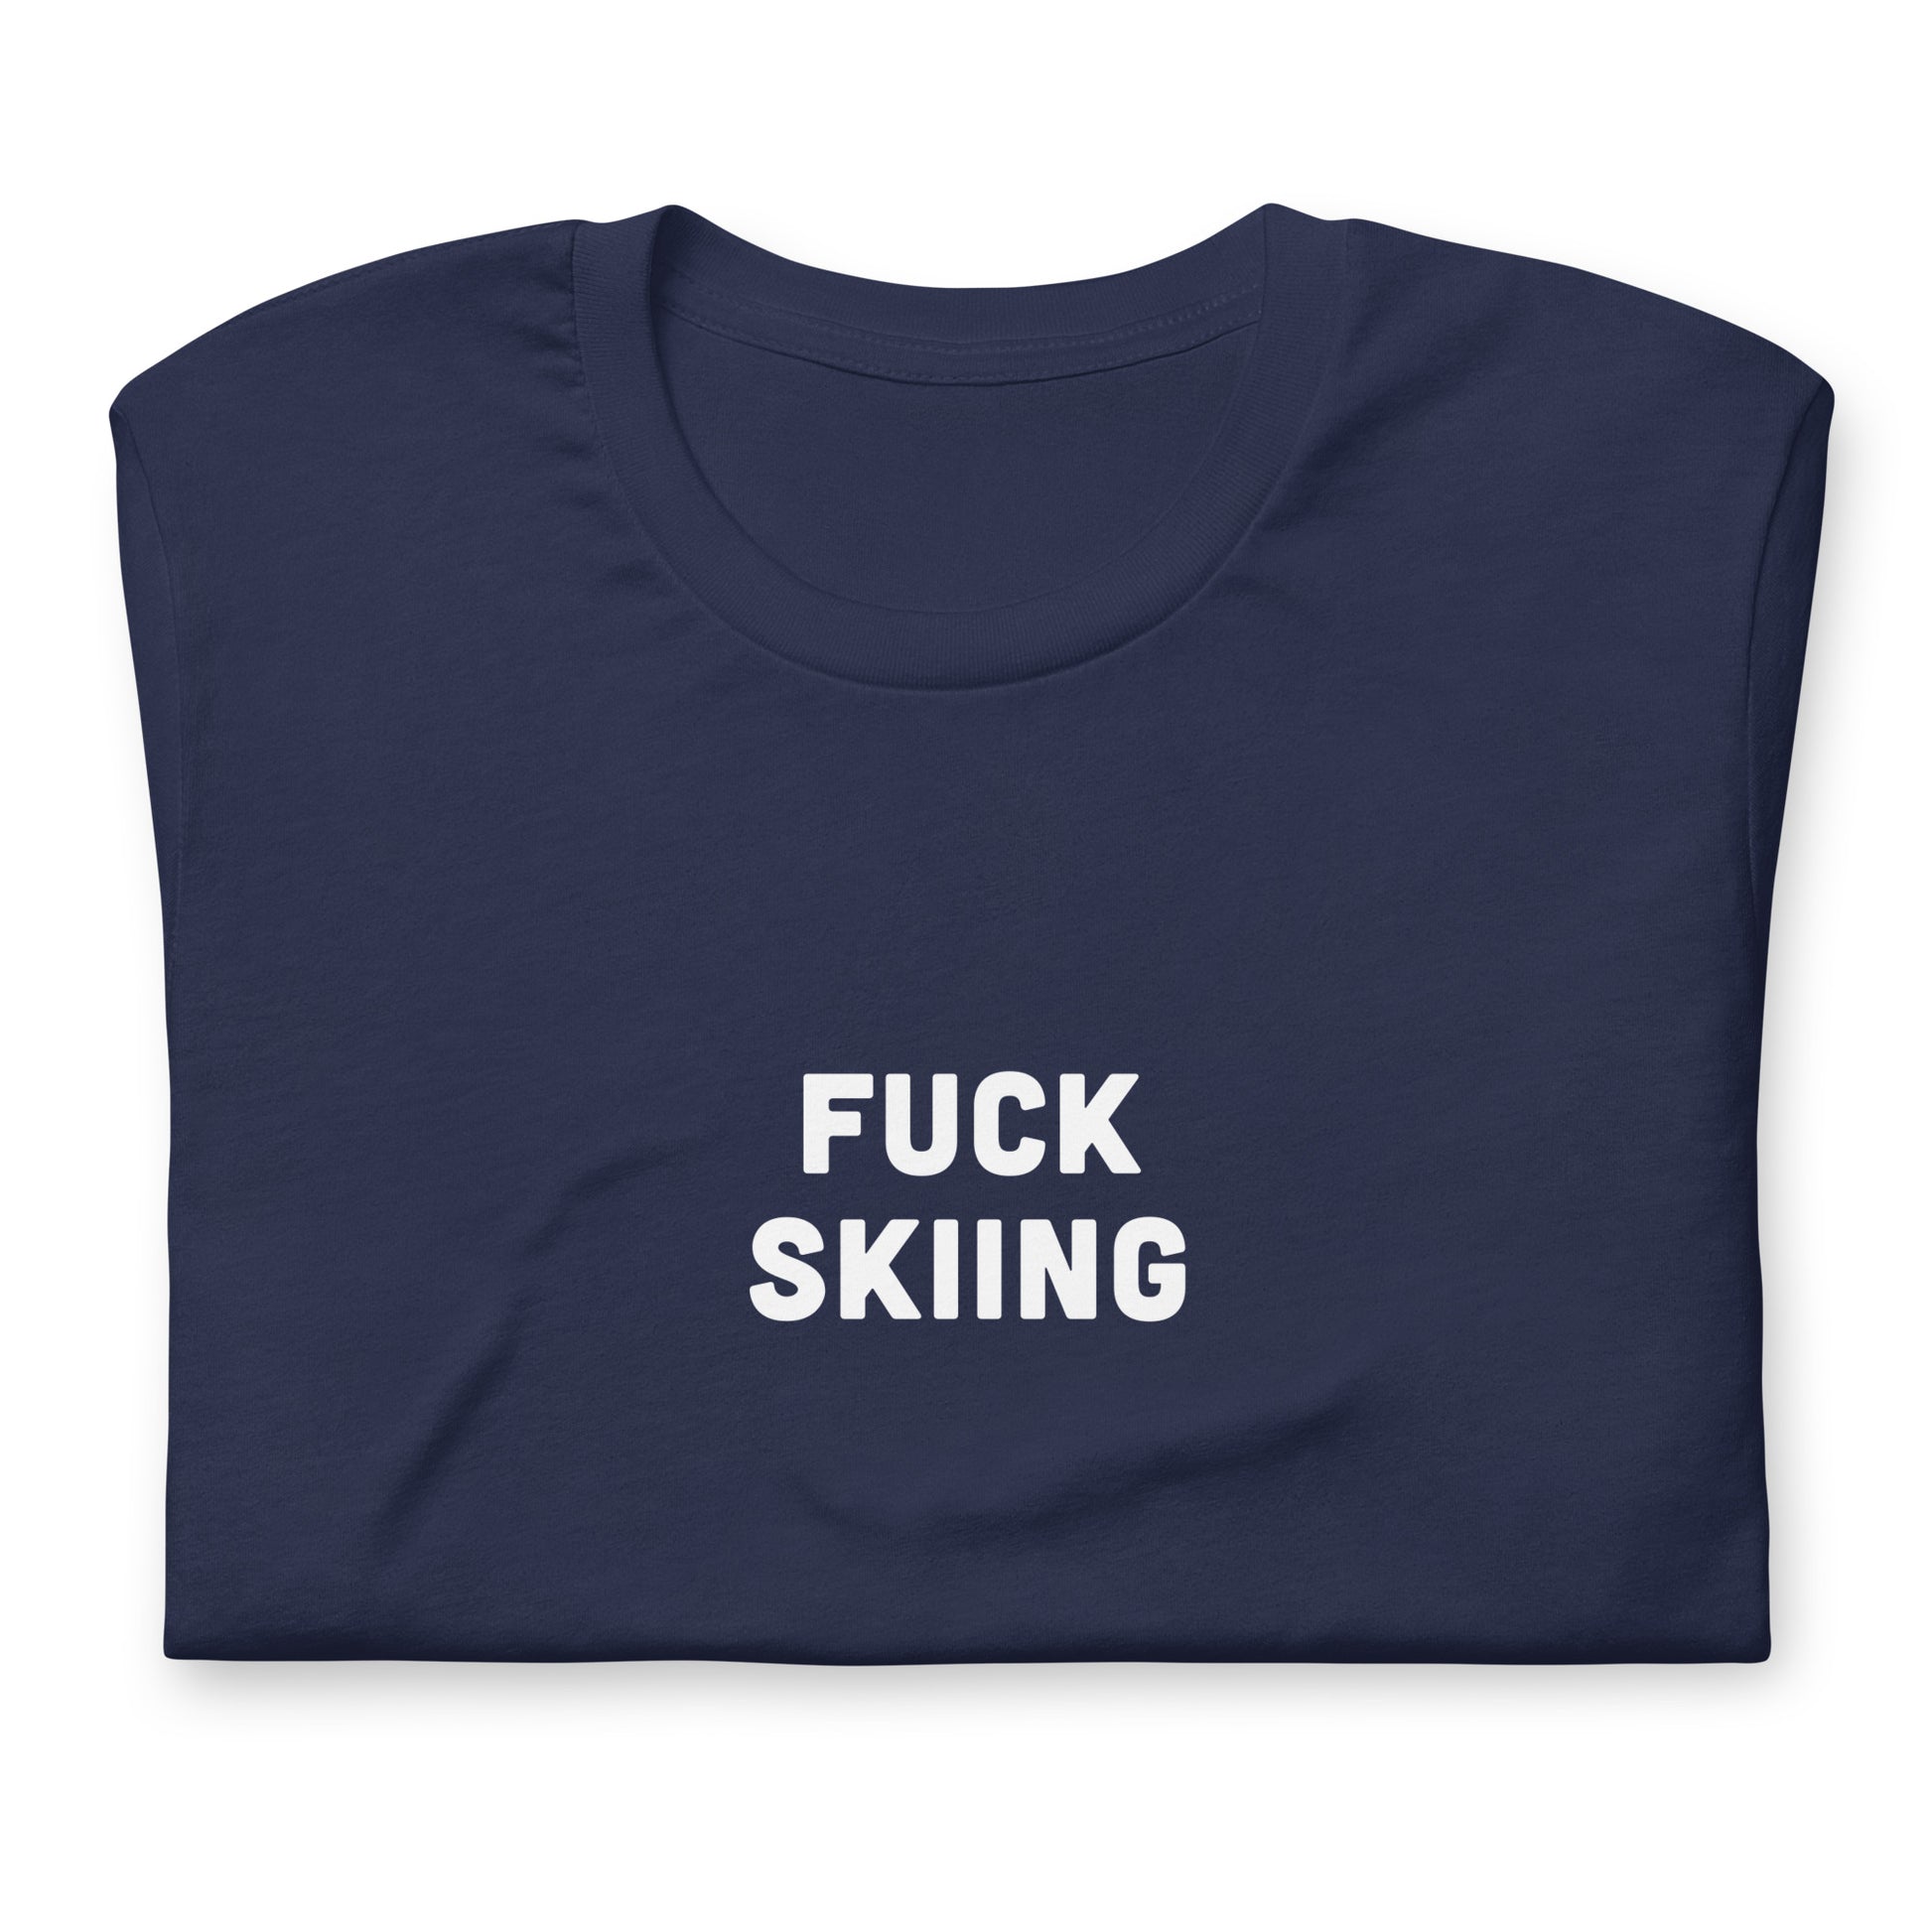 Fuck Skiing T-Shirt Size L Color Black